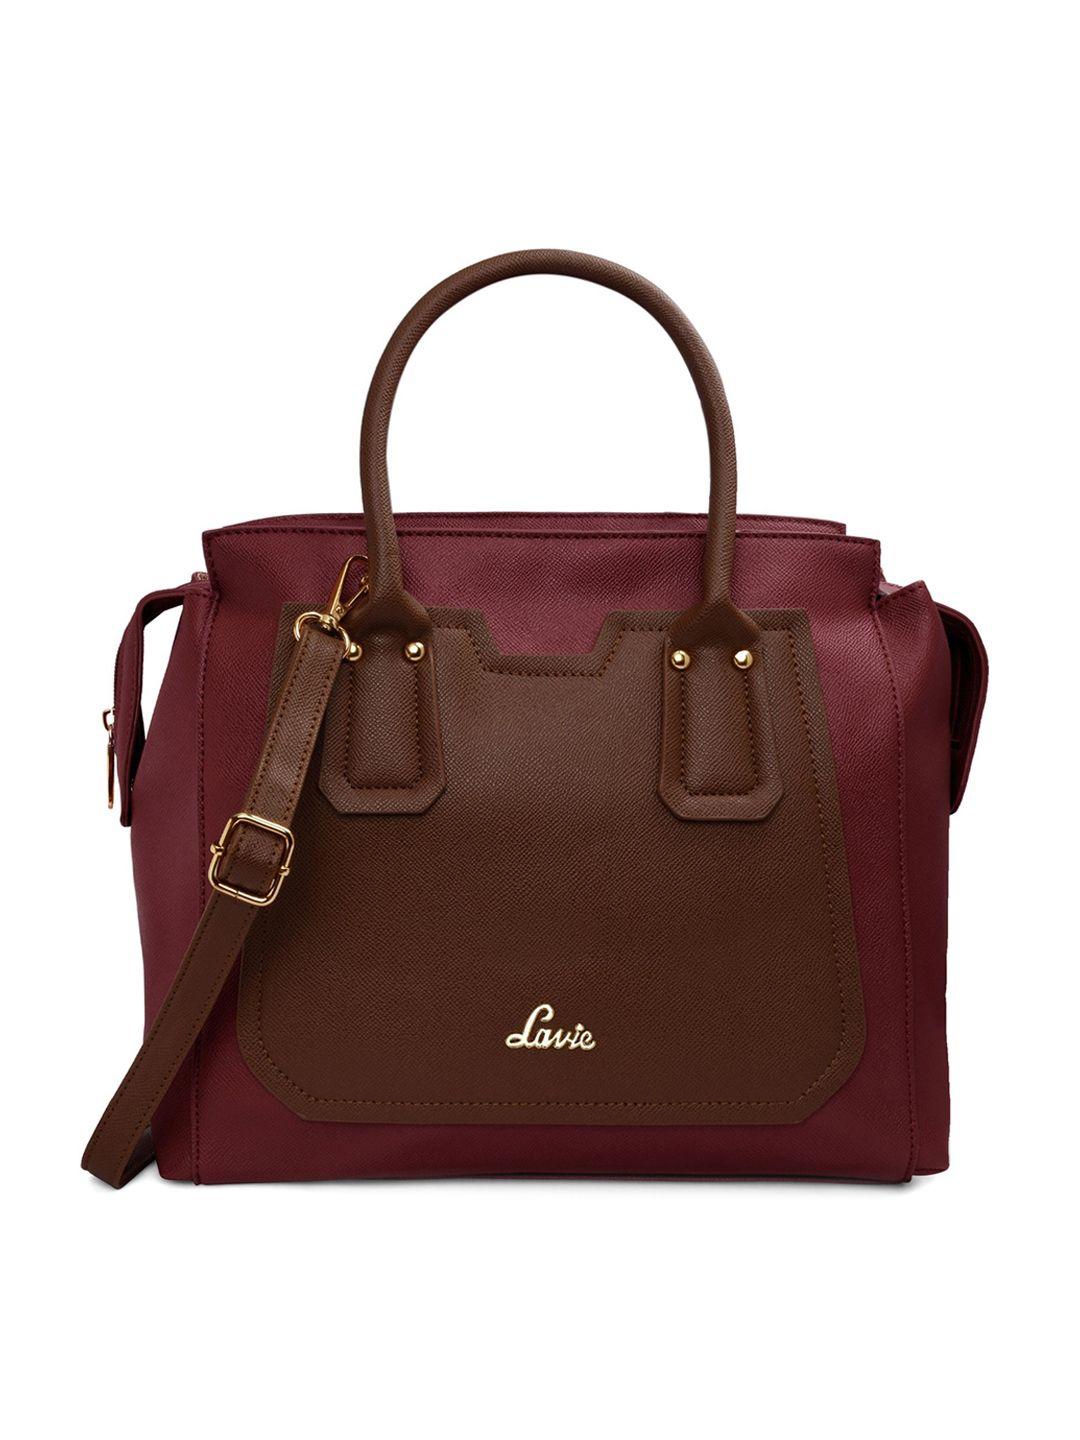 lavie maroon colourblocked structured handheld bag with tasselled